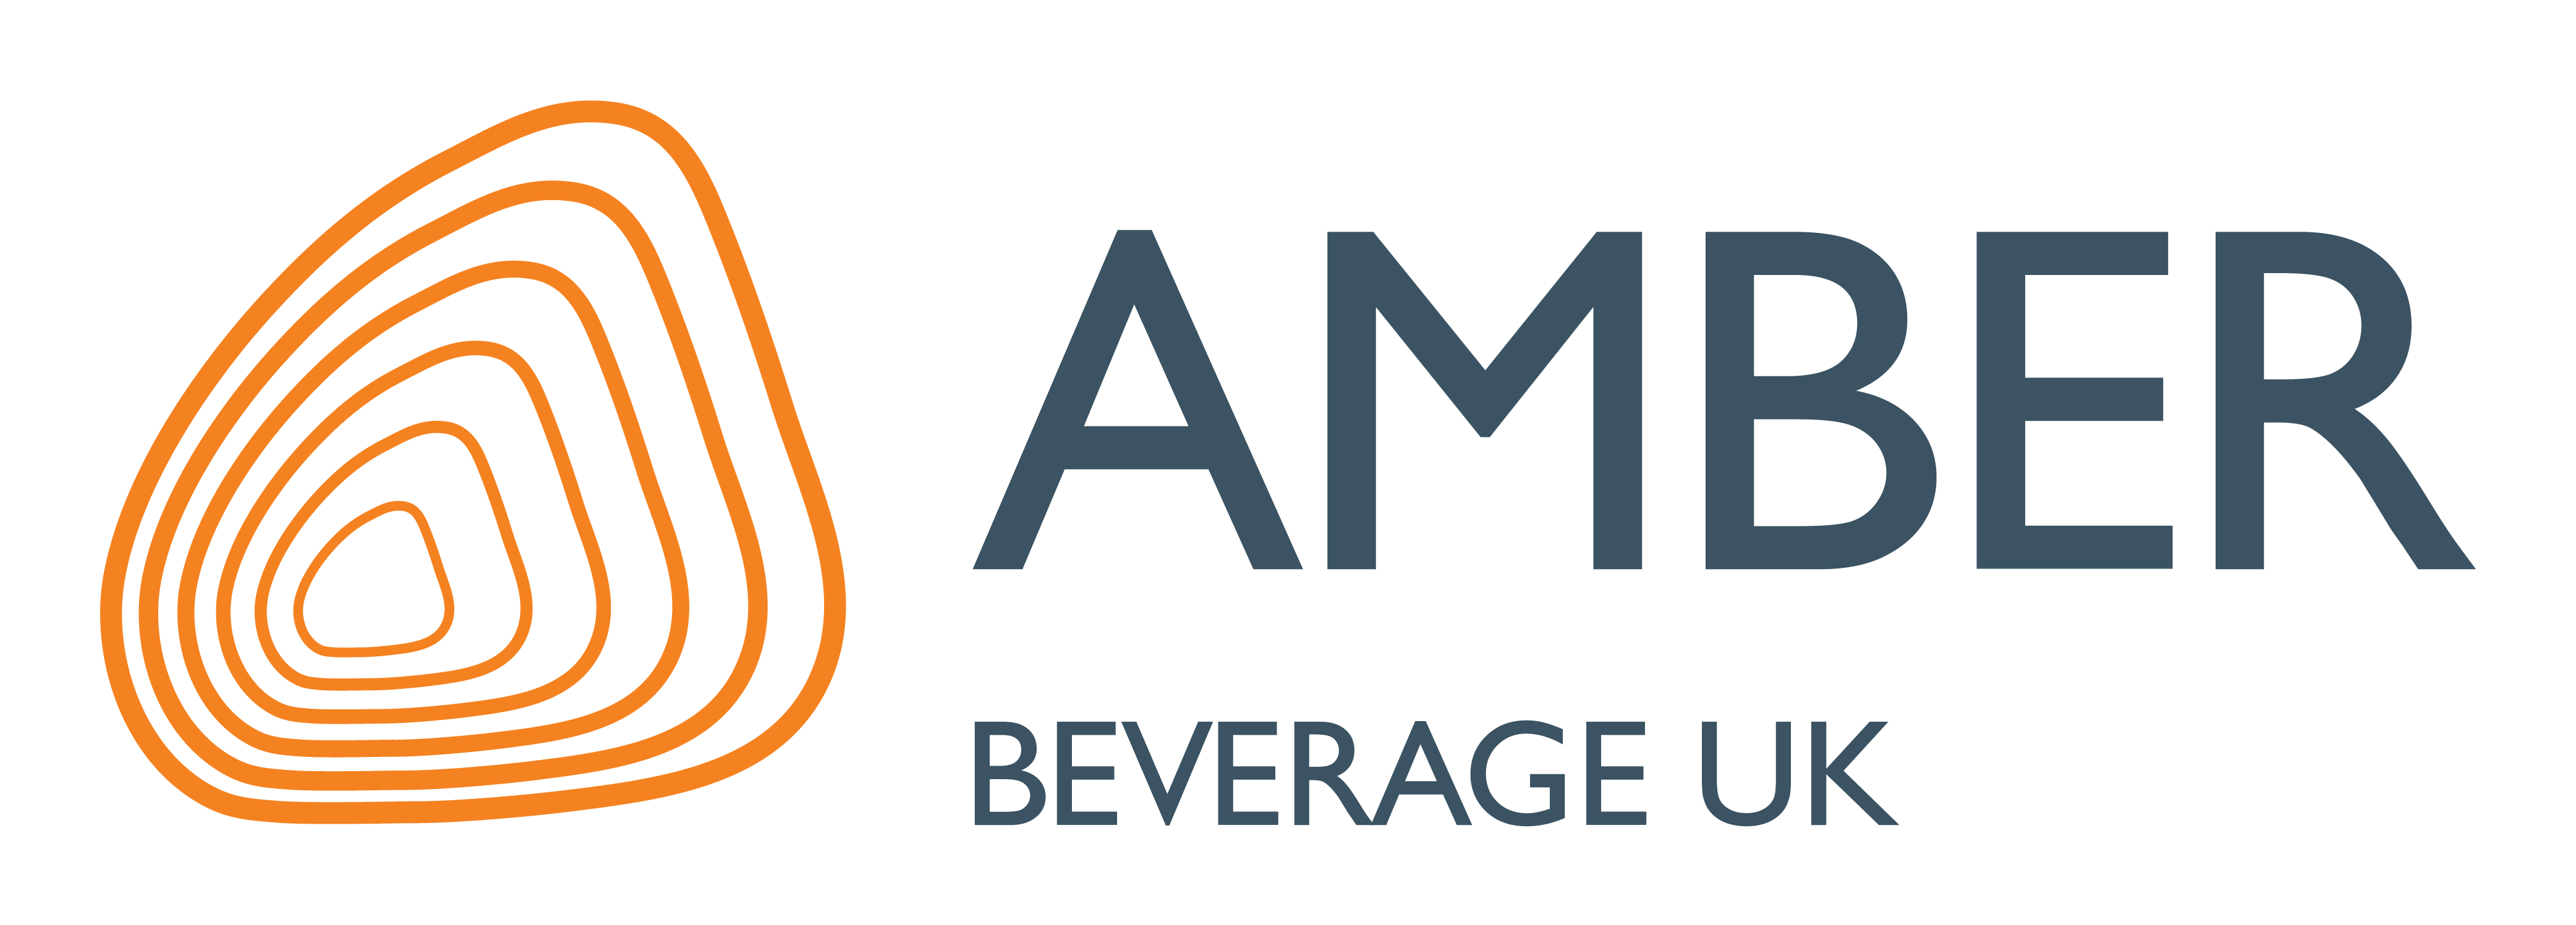 Amber Beverage UK